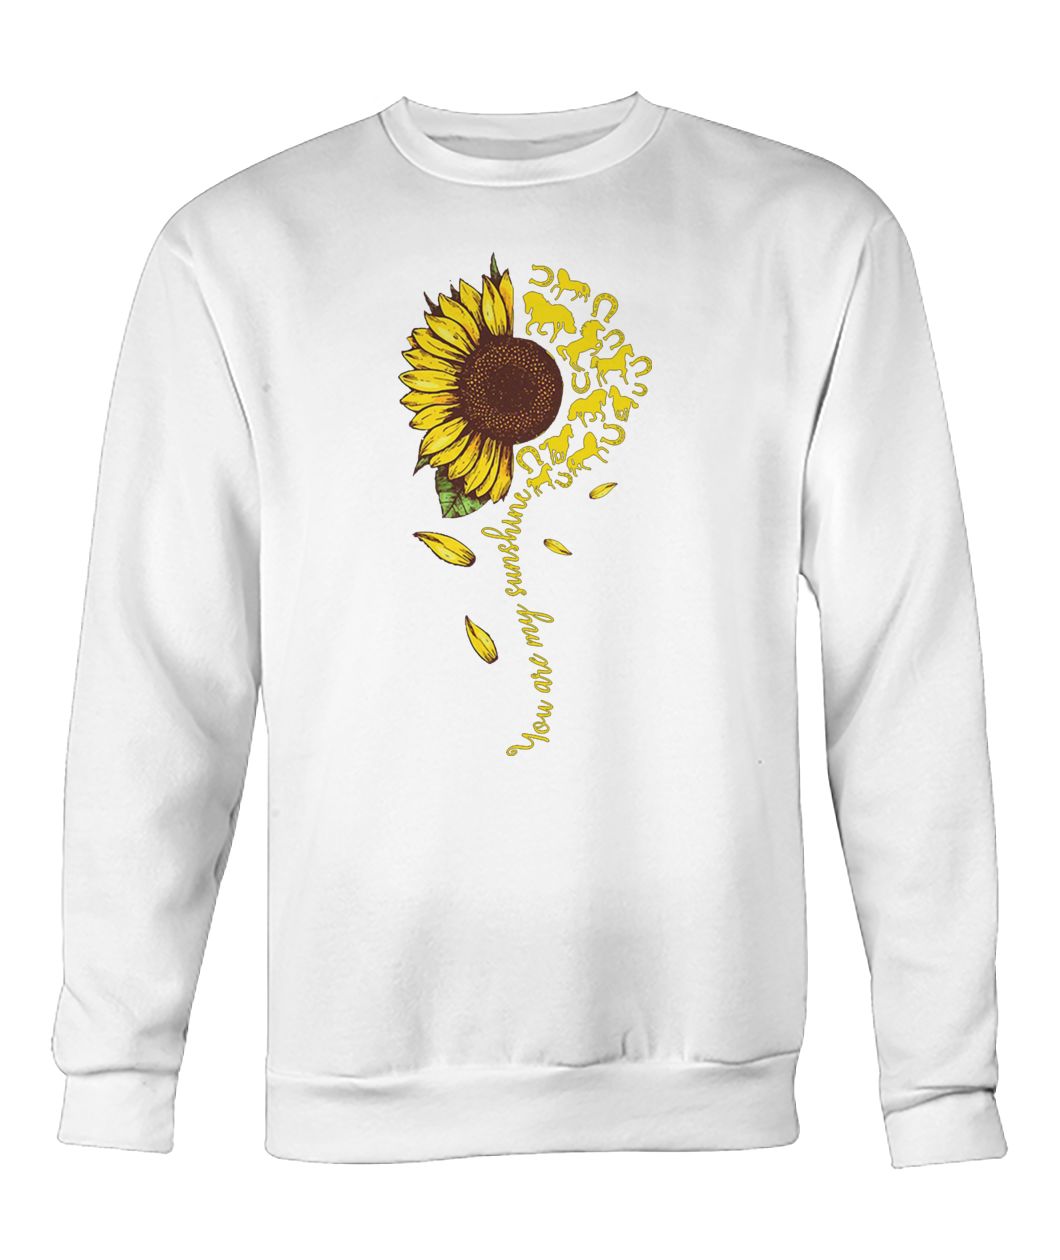 You are my sunshine horse sunflower crew neck sweatshirt